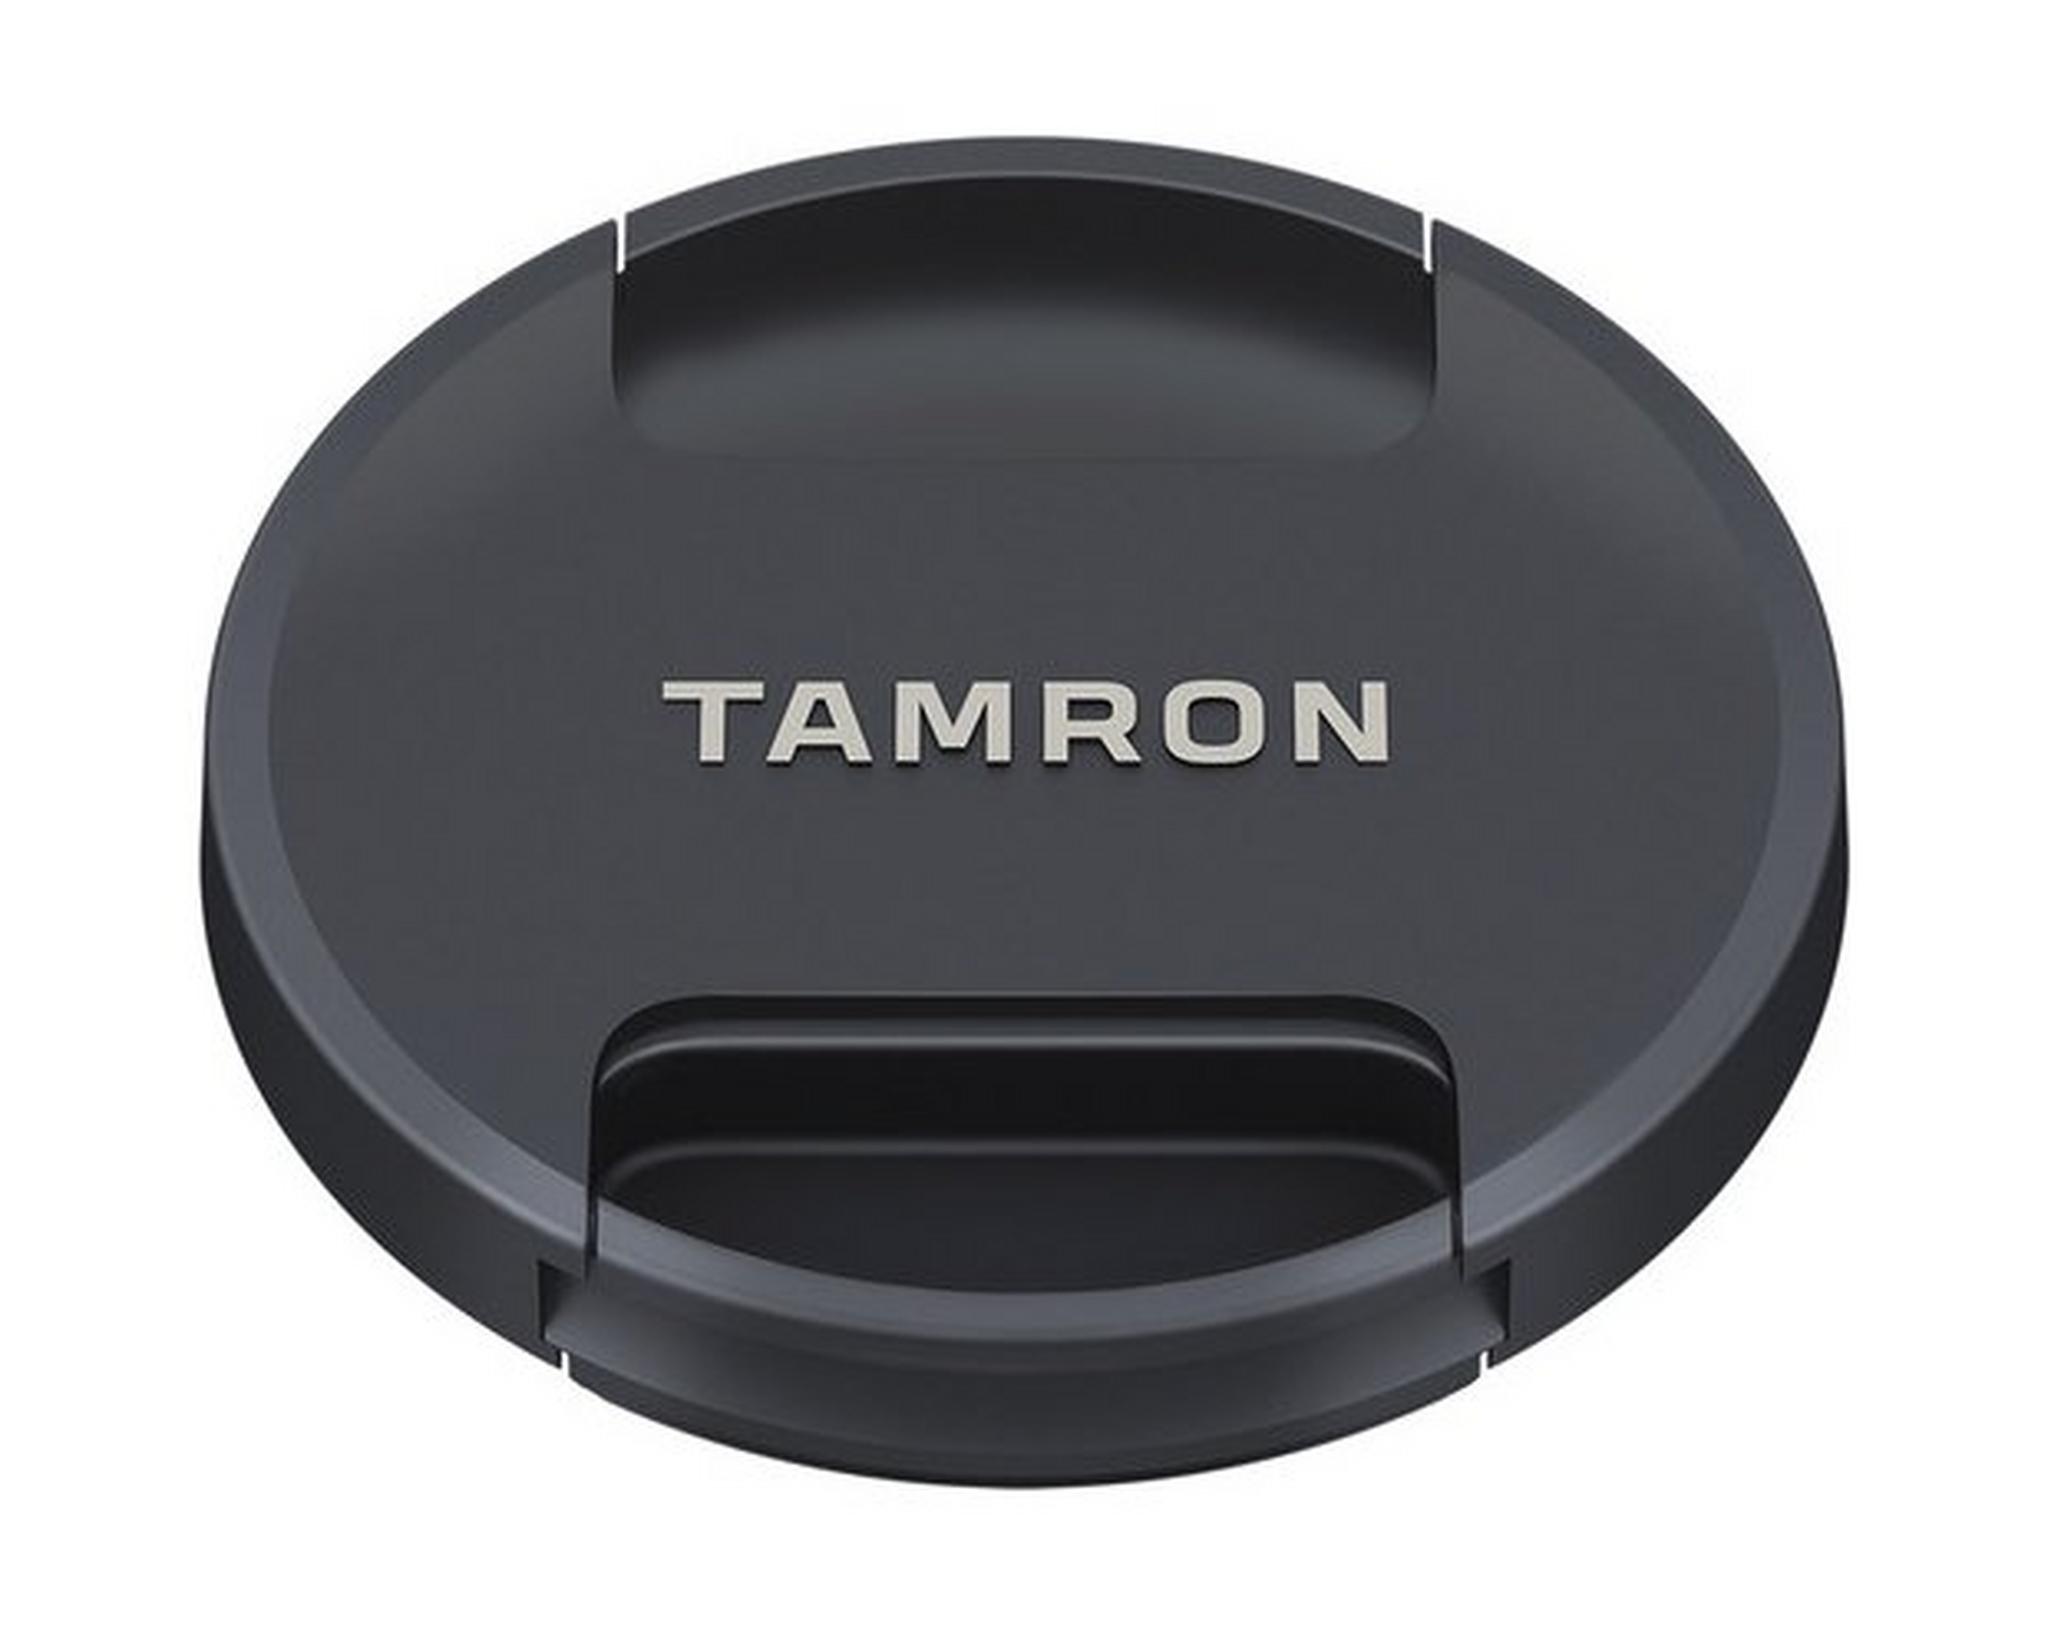 عدسة تامرون (A025E) ٧٠ - ٢٠٠ ملم بفتحة قياس إف / ٢,٨ دي آي مع تقنية تعويض الاهتزاز (VC) يو إس دي لكاميرا كانون - أسود